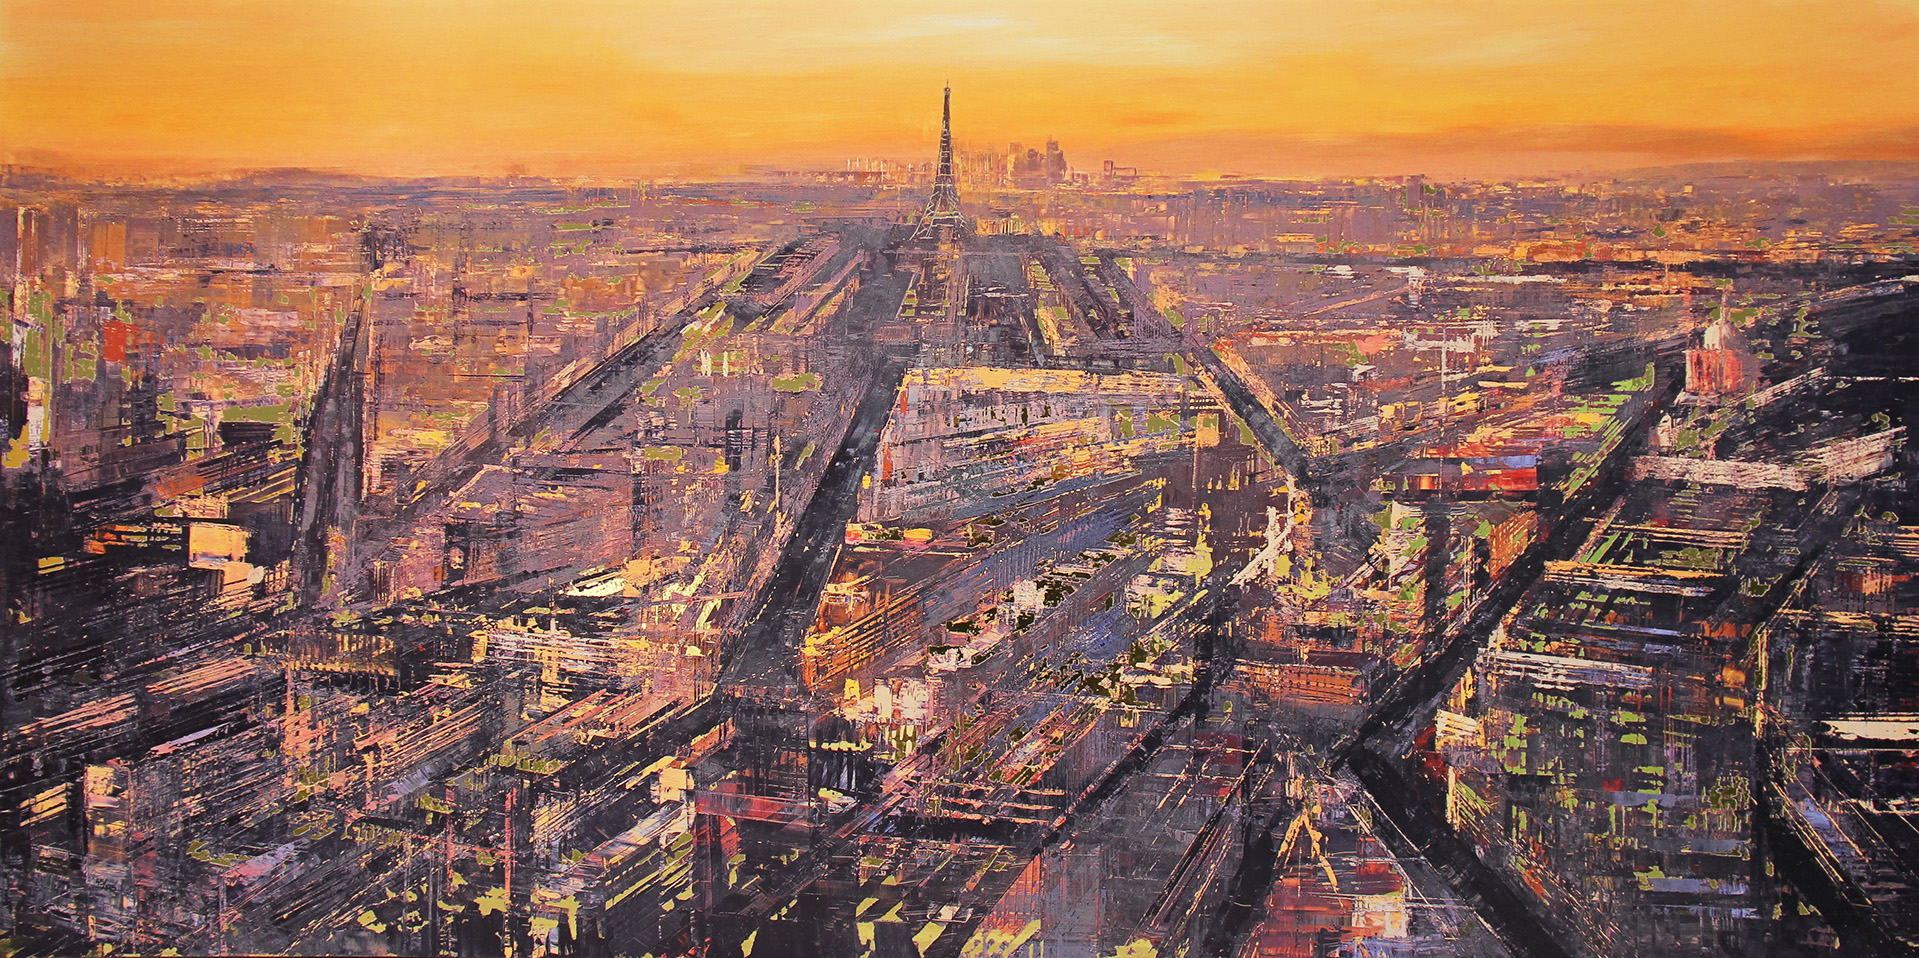 Parisian Metropolis by Paul Kenton, UK contemporary cityscape artist, a limited edition print of the Paris skyline from his Paris Collection